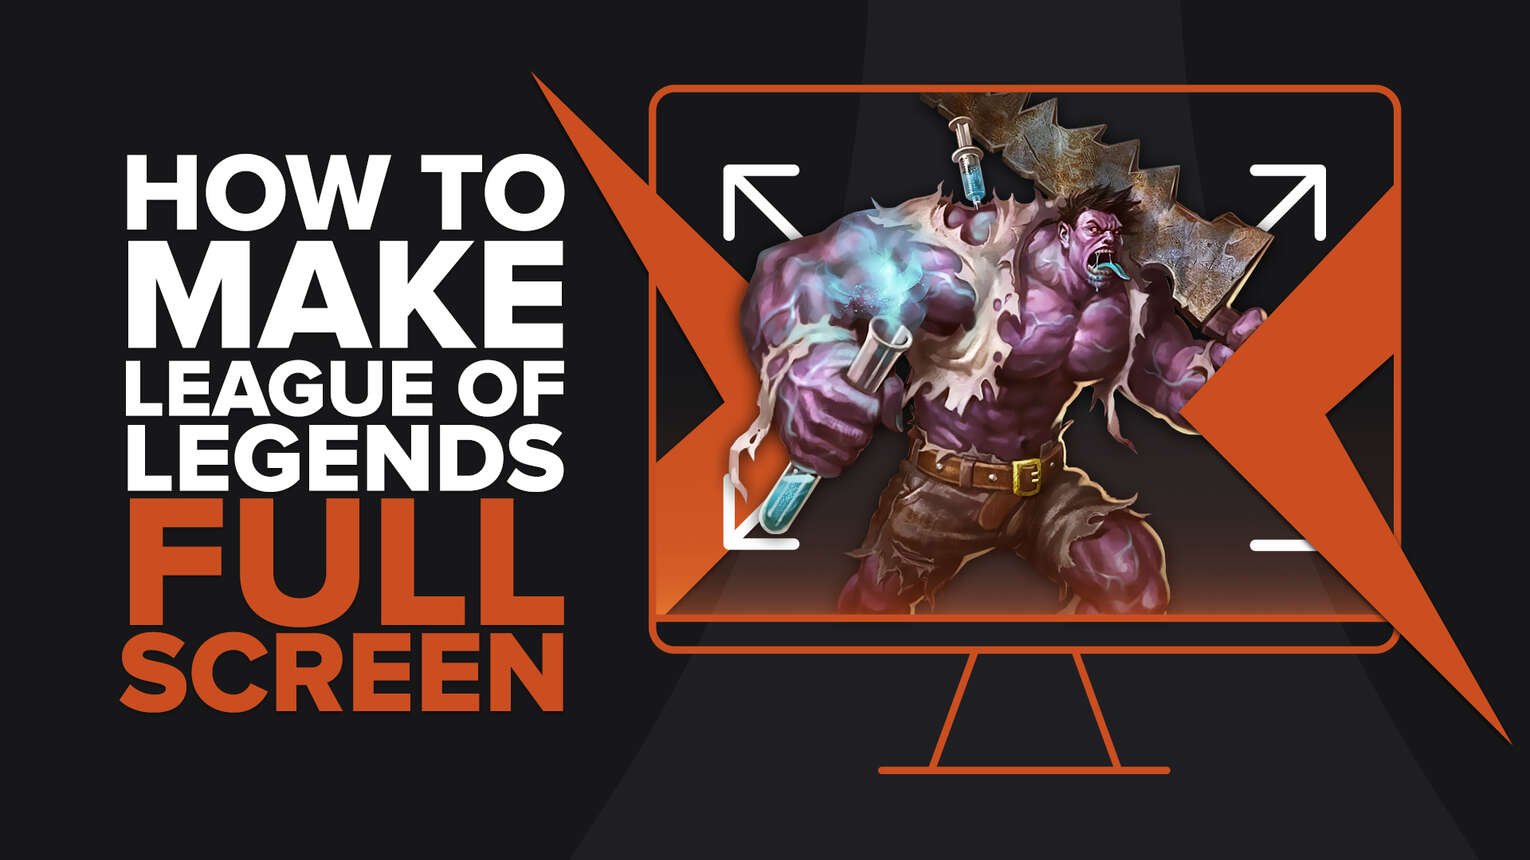 How to make League of Legends fullscreen